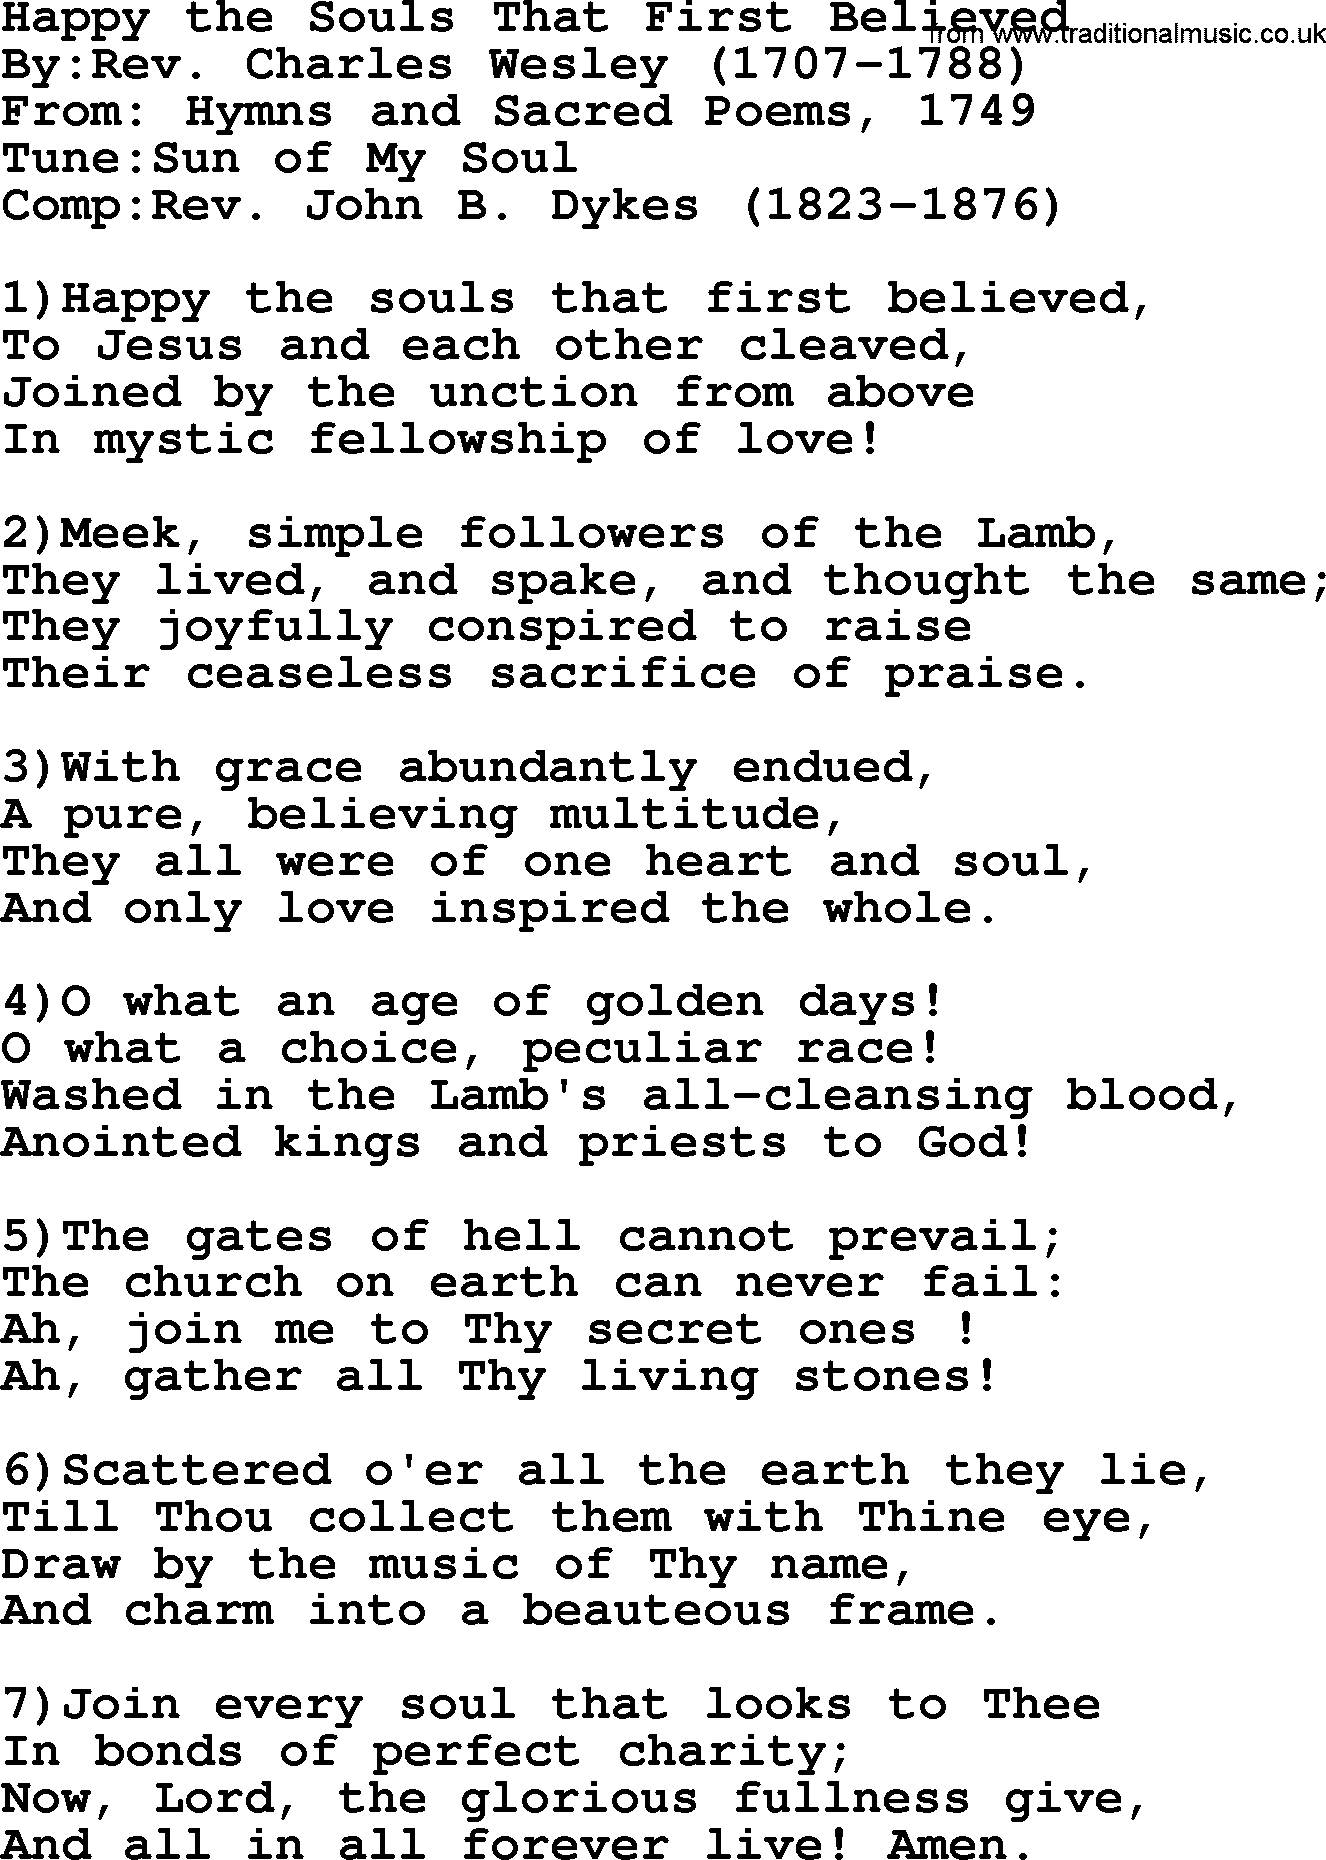 Methodist Hymn: Happy The Souls That First Believed, lyrics